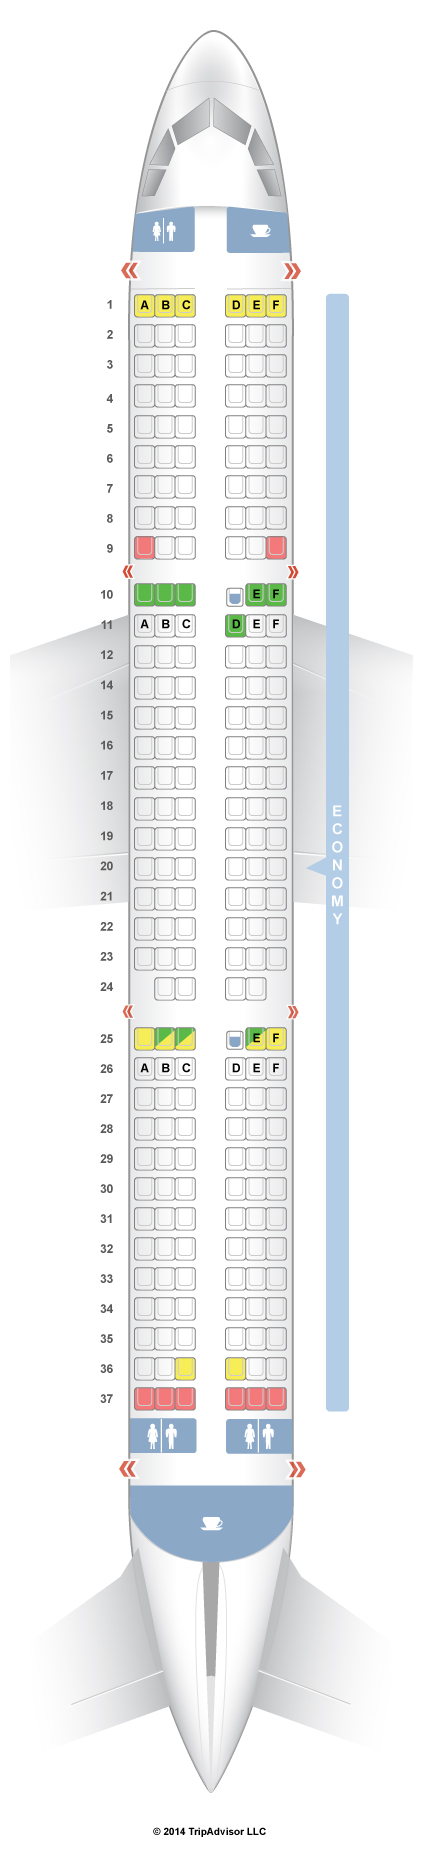 Seatguru Seat Map Air France Airbus A321 321 V2 52076 Hot Sex Picture